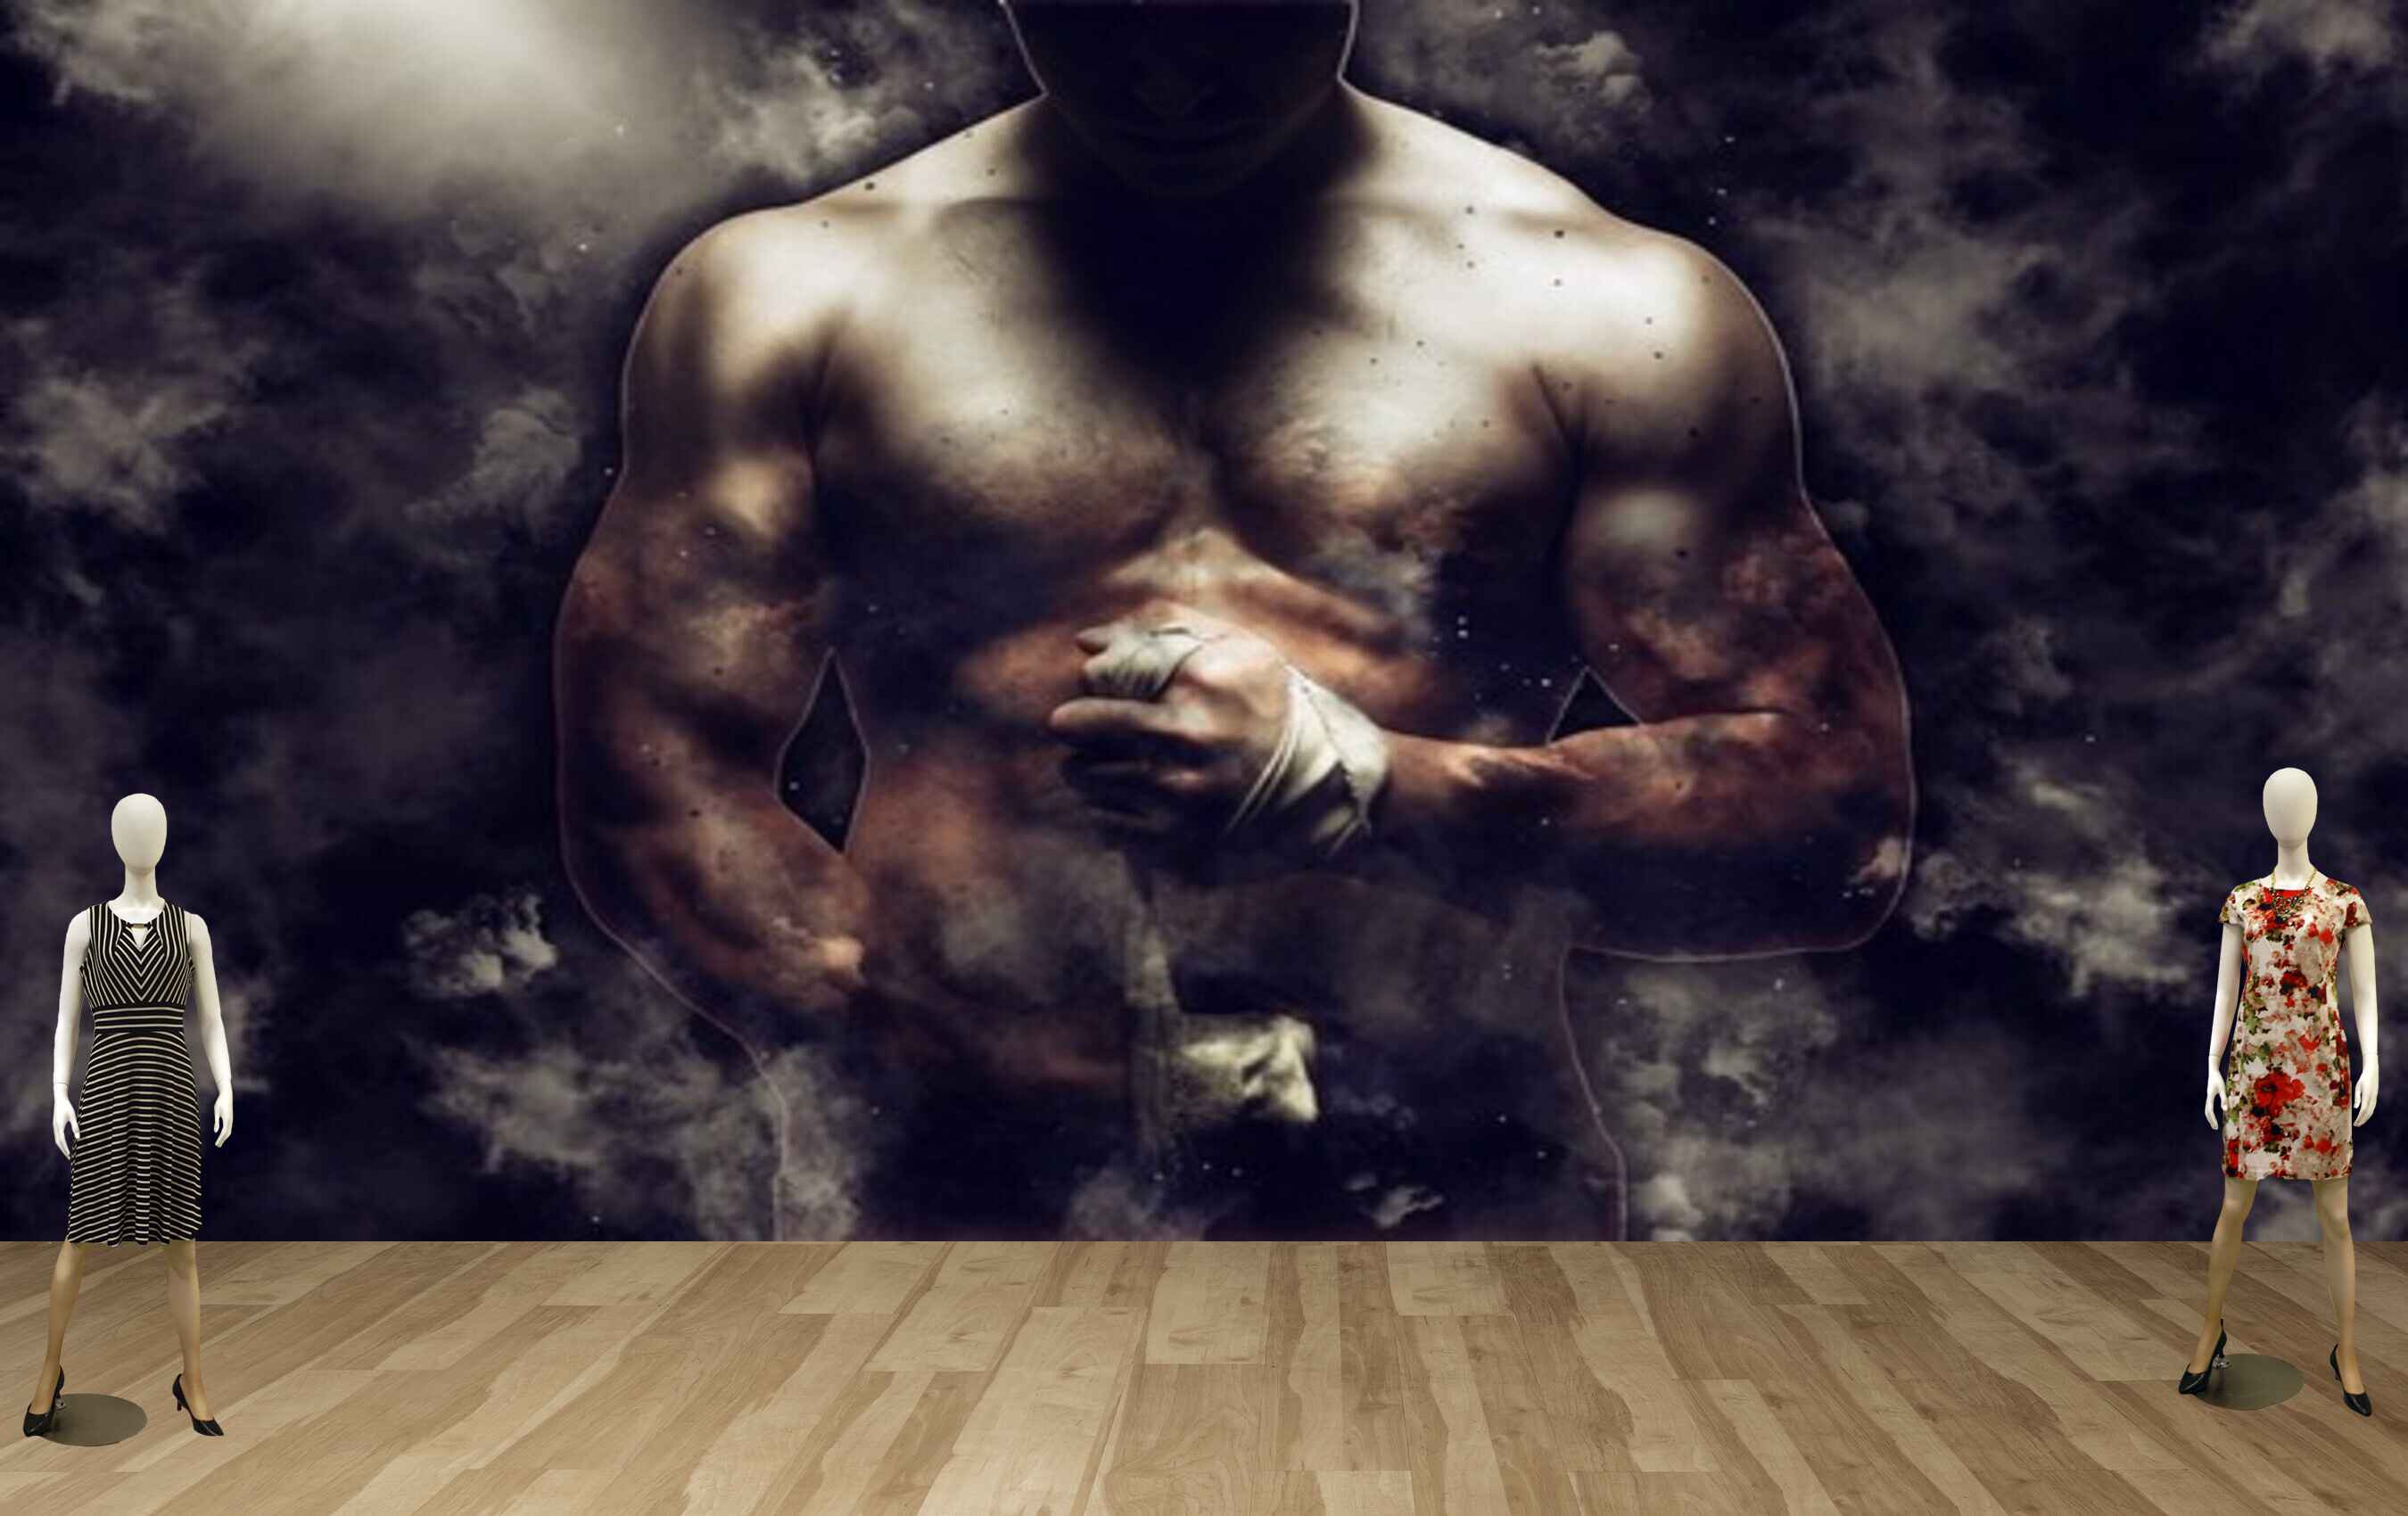 Avikalp MWZ3593 Smoky Fit Men HD Wallpaper for Gym Fitness